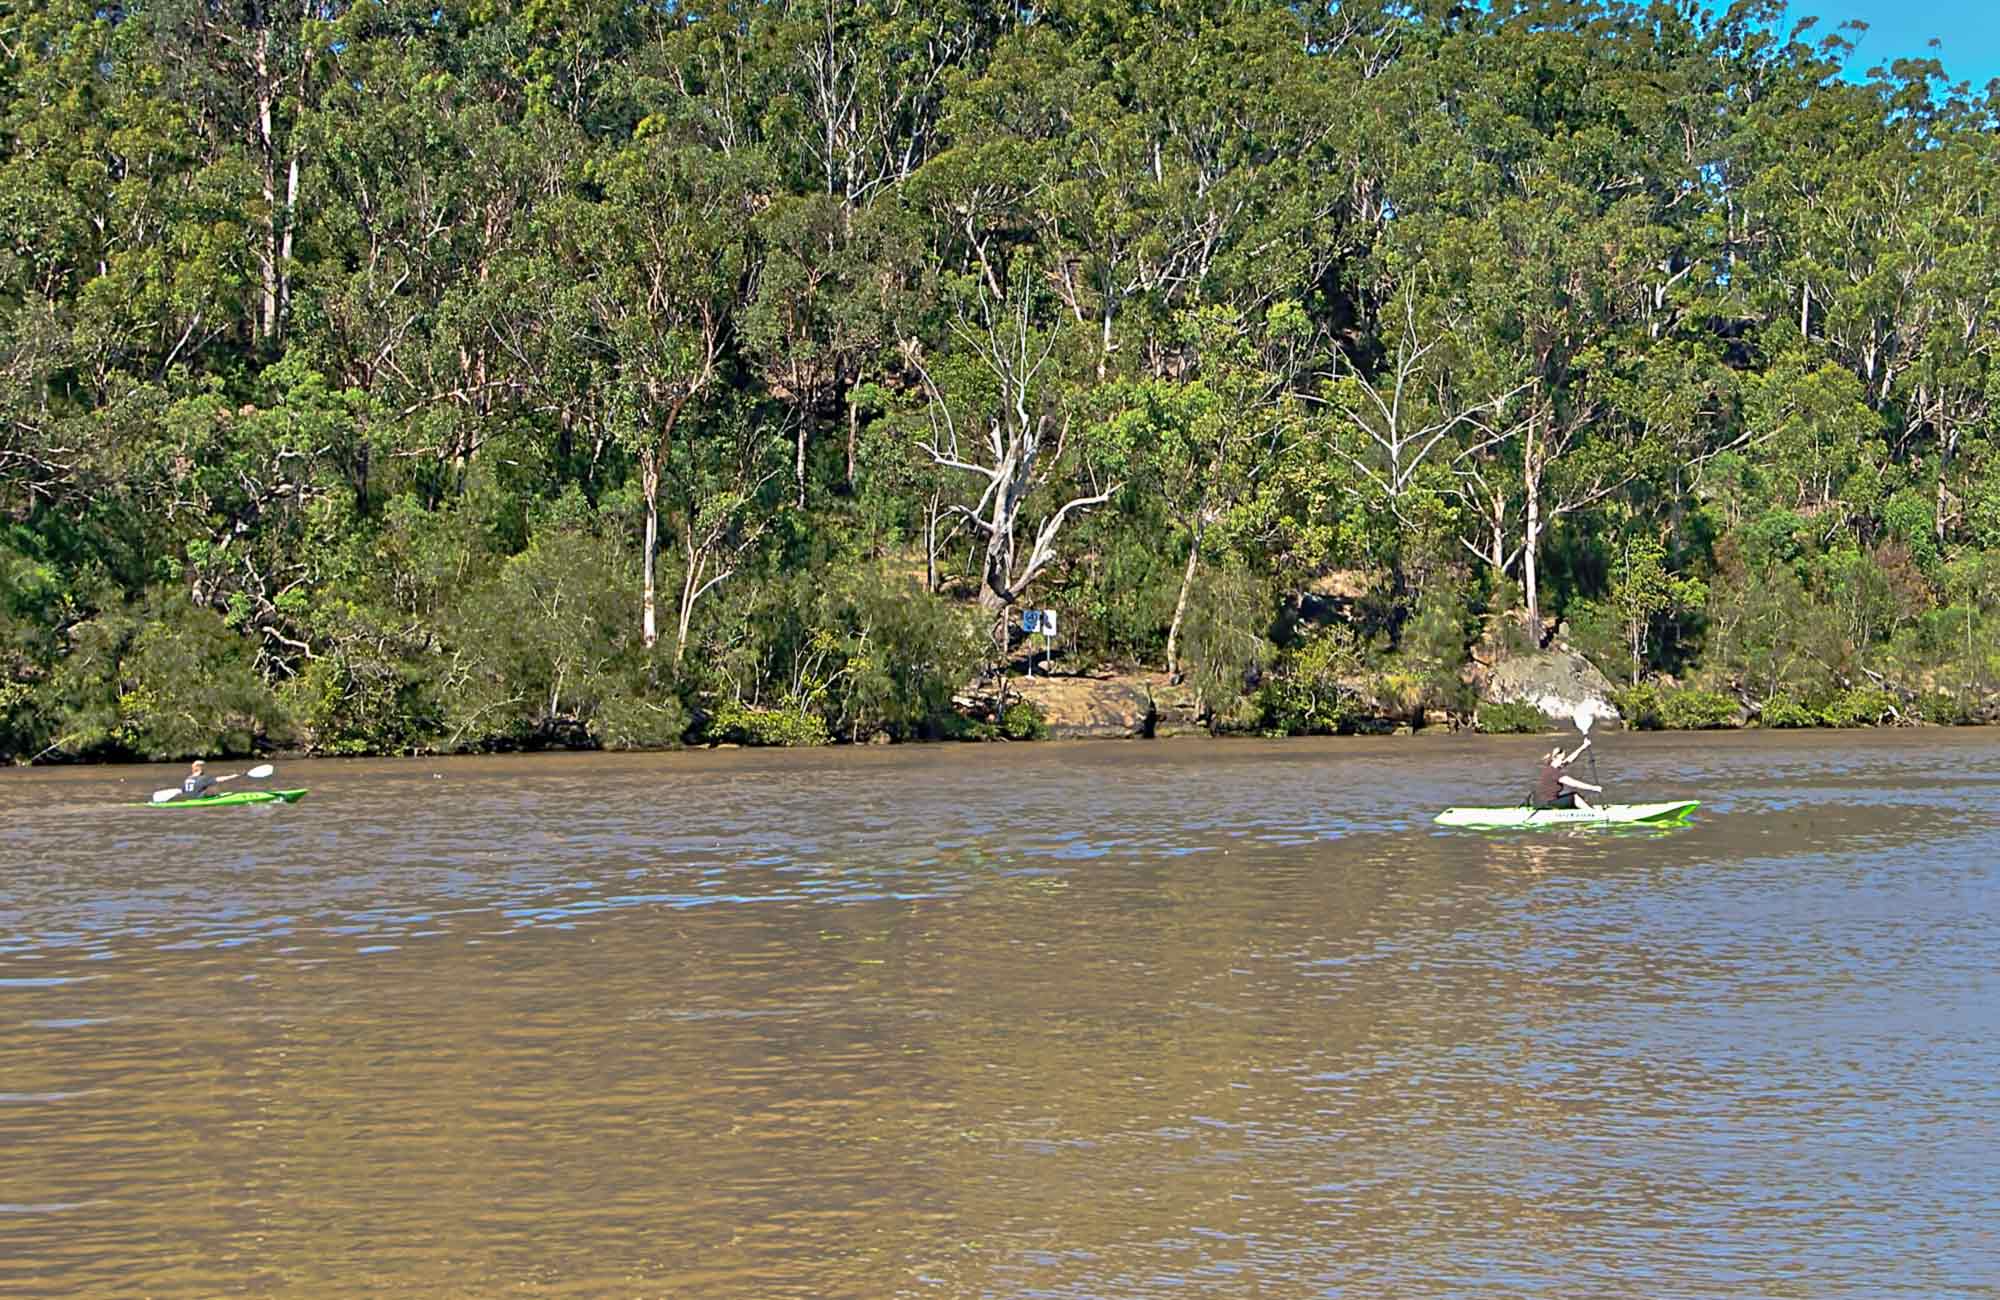 People kayaking on the river. Photo: John Spencer